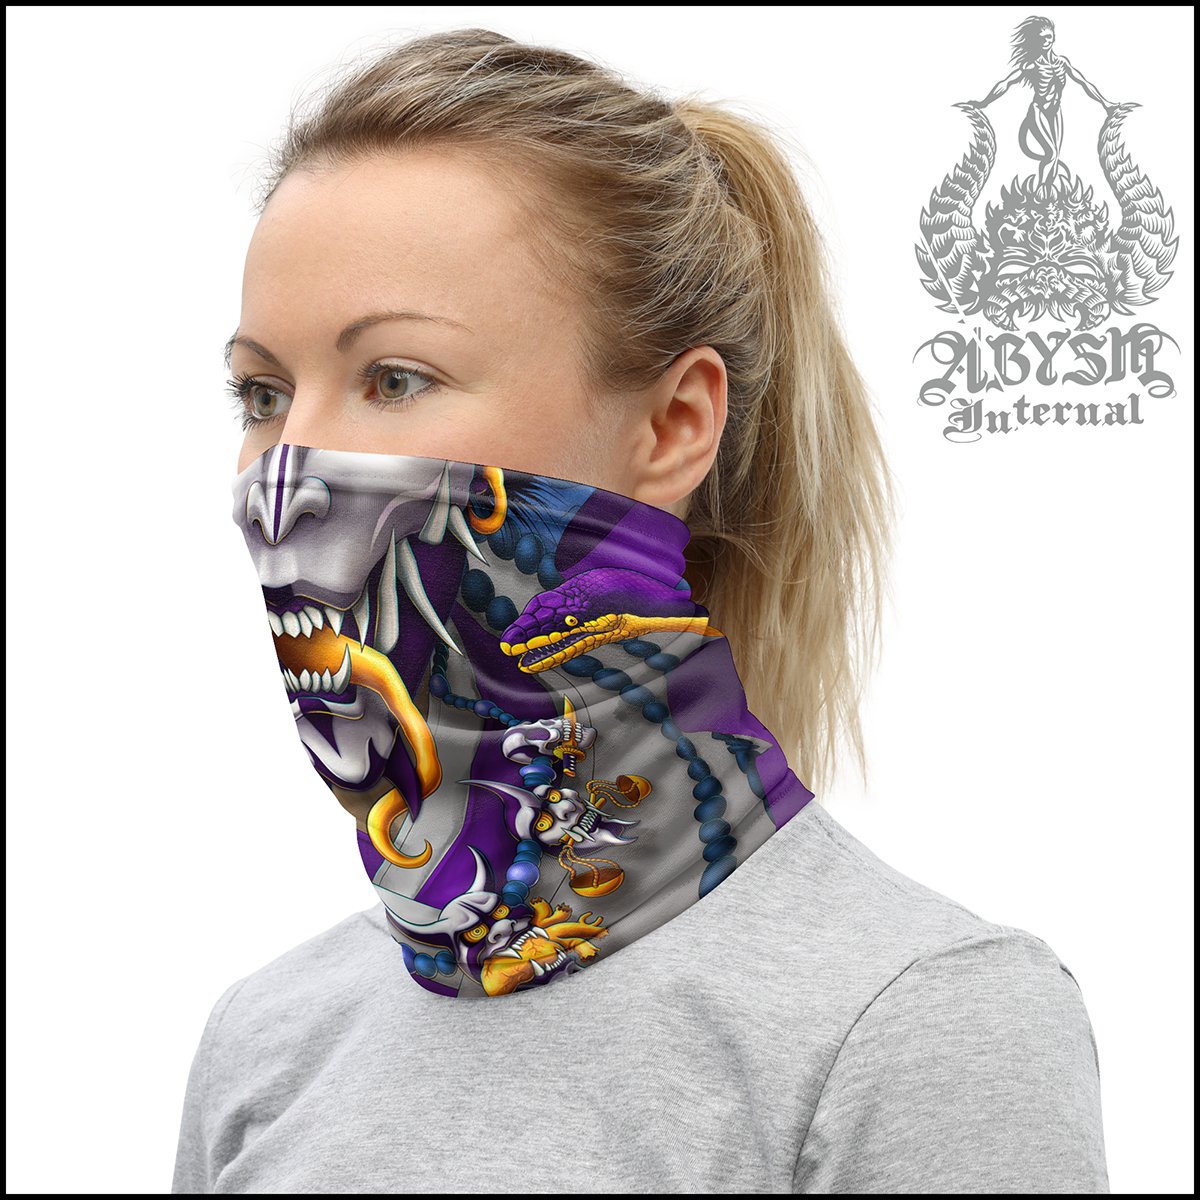 Hannya Neck Gaiter, Demon Face Mask, Japanese Oni Printed Head Covering, Graffiti Street Outfit, Snake, Fangs, Headband - Blue, Purple - Abysm Internal